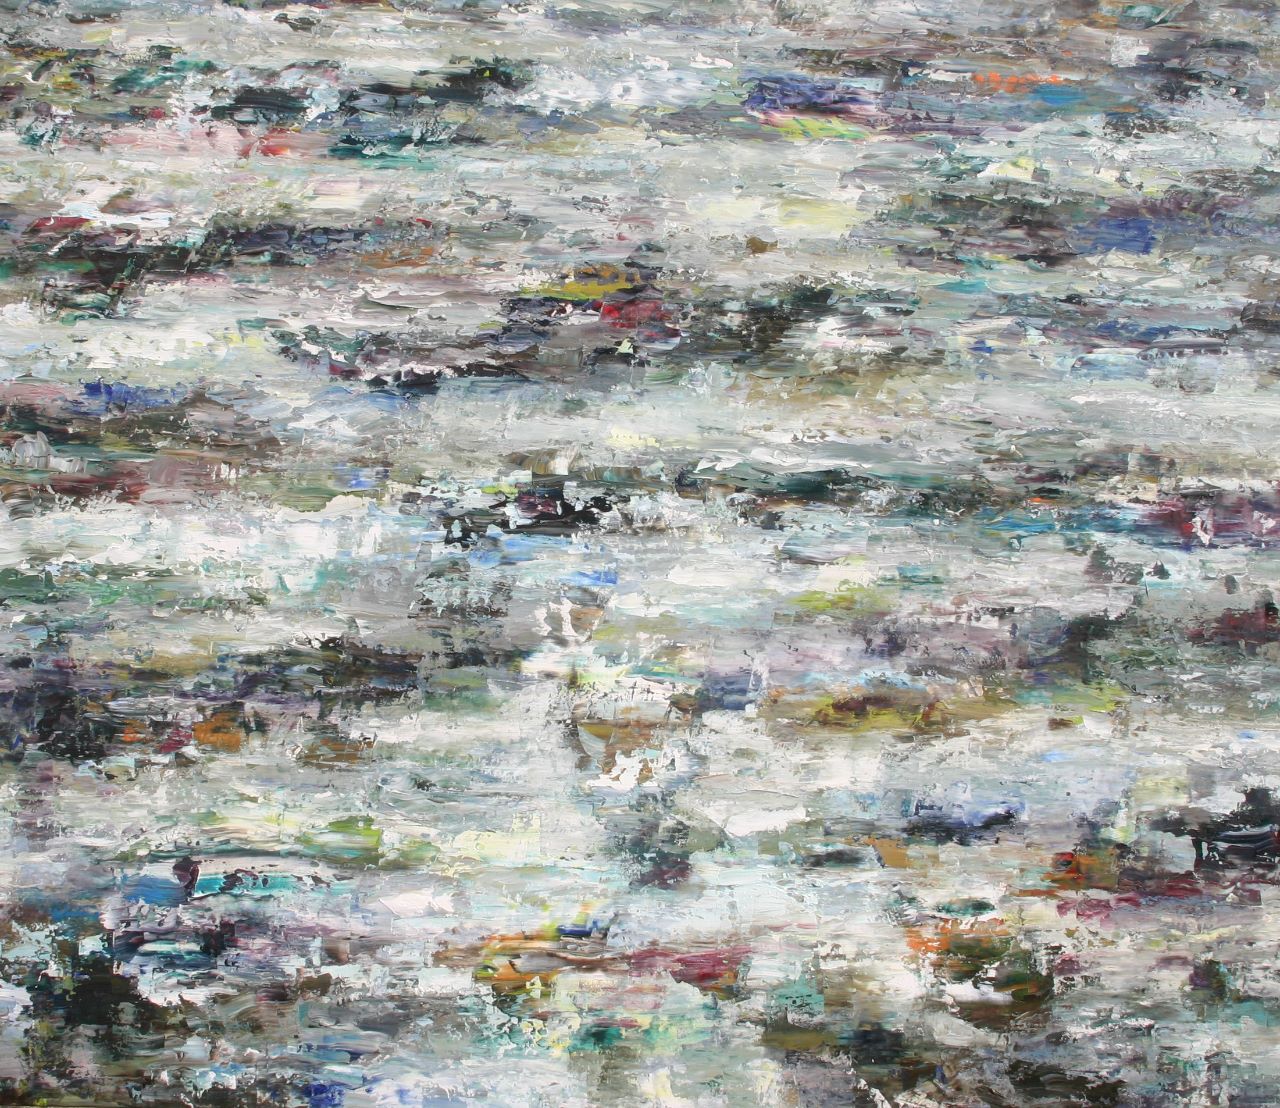 Rudi Weiss, Fluss, 24-2015, Öl auf Leinwand, 120 cm x 140 cm, Preis: 4.800 €, wer024kü